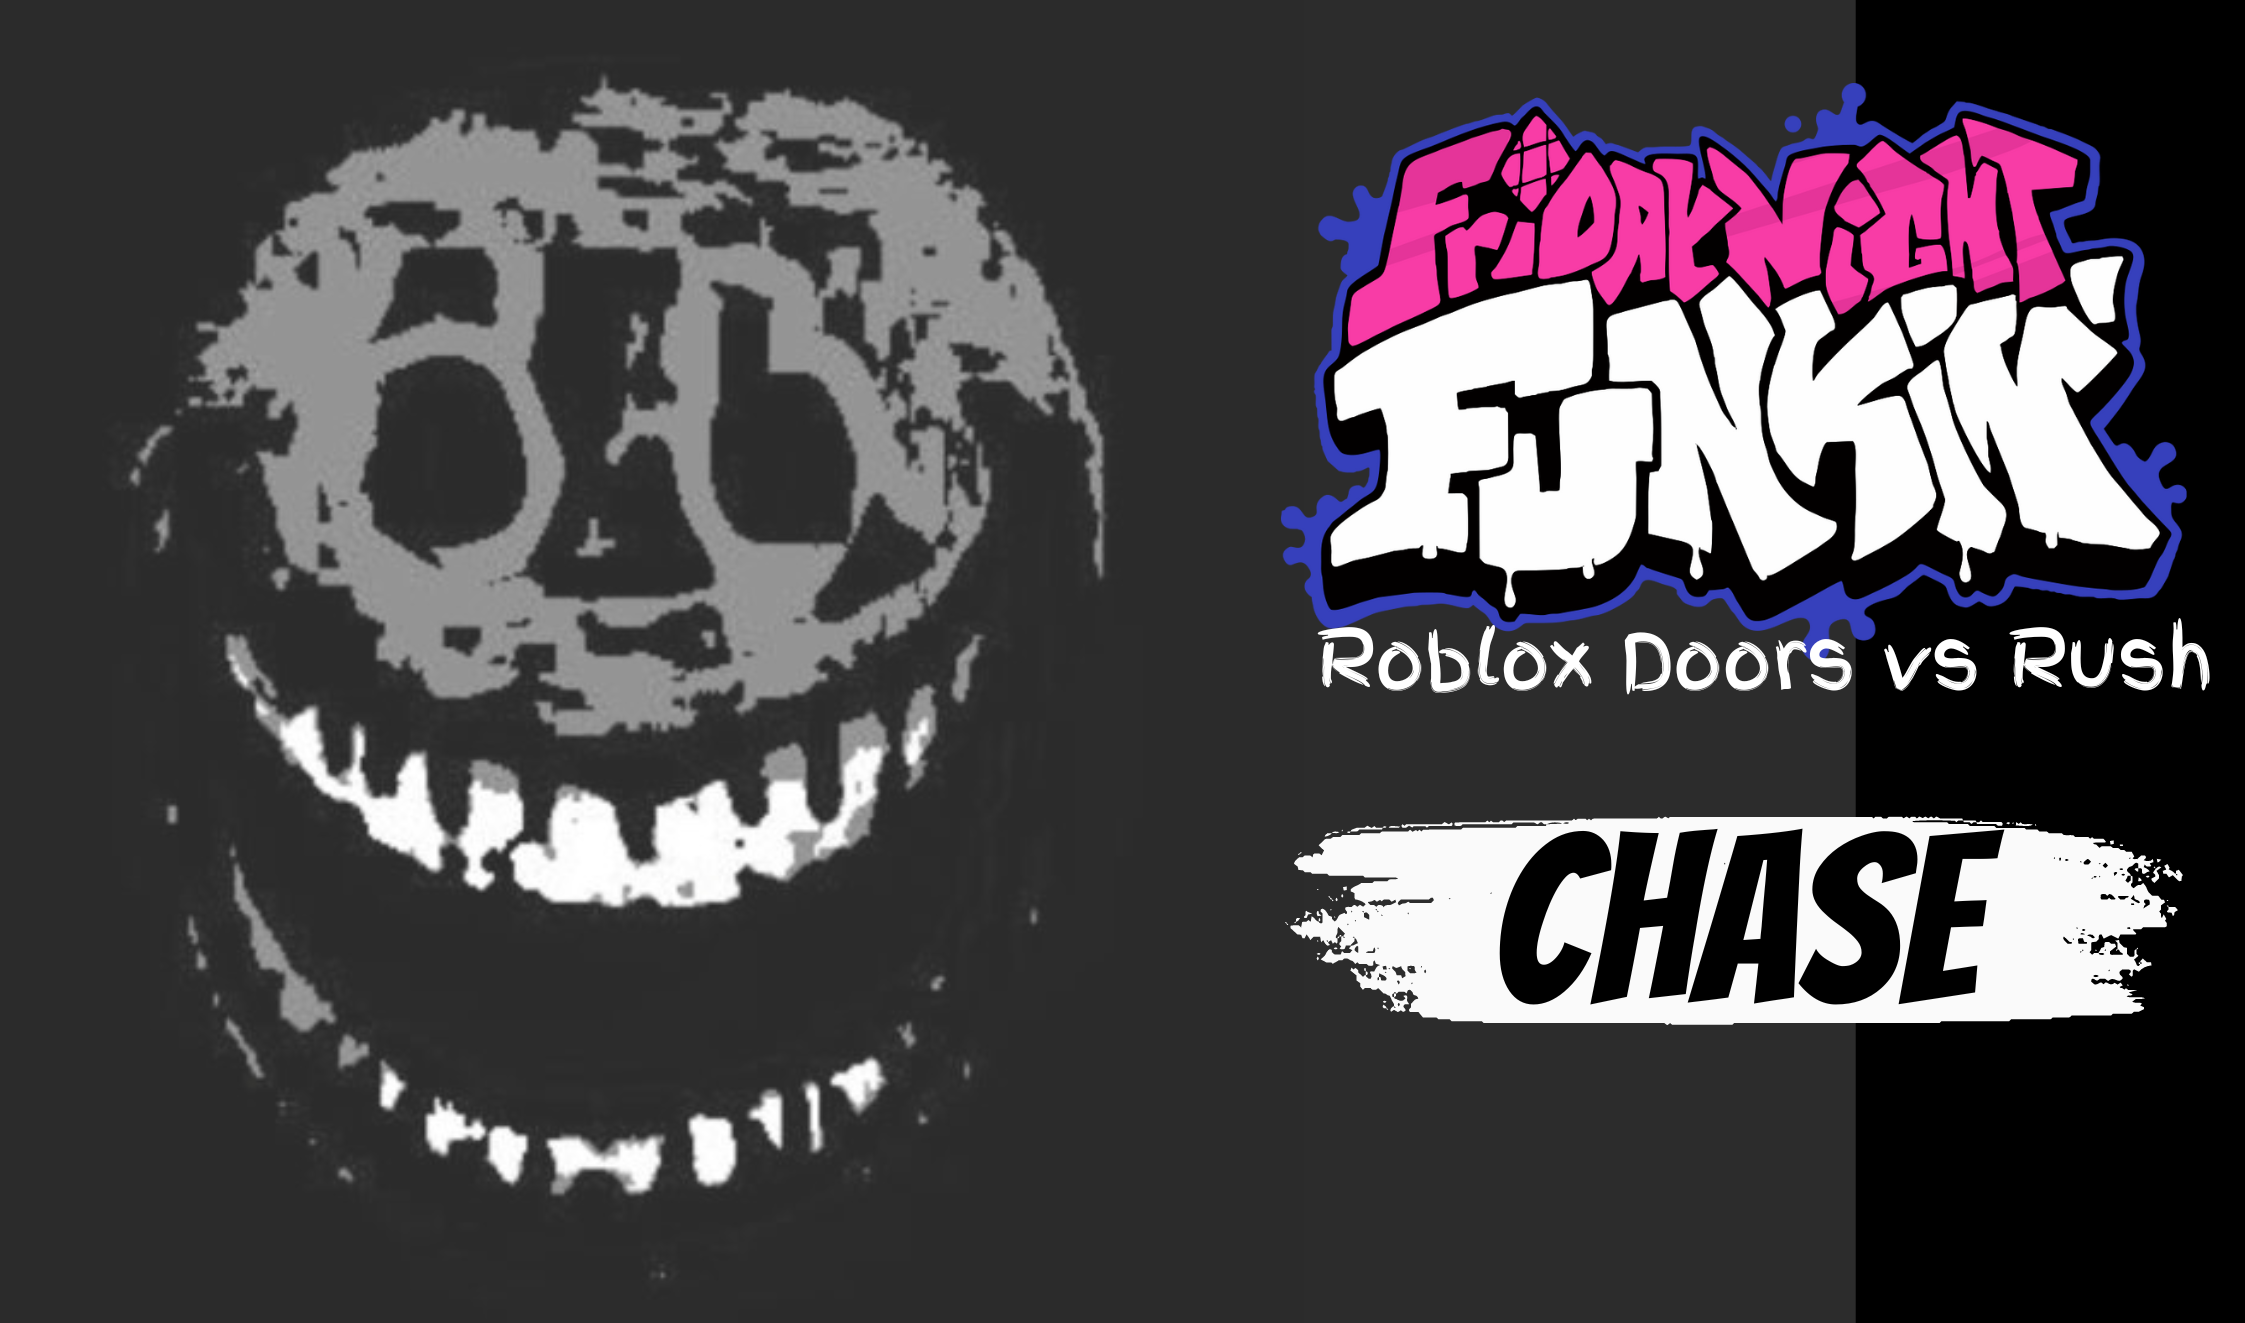 Fnf vs roblox doors seek [Friday Night Funkin'] [Mods]